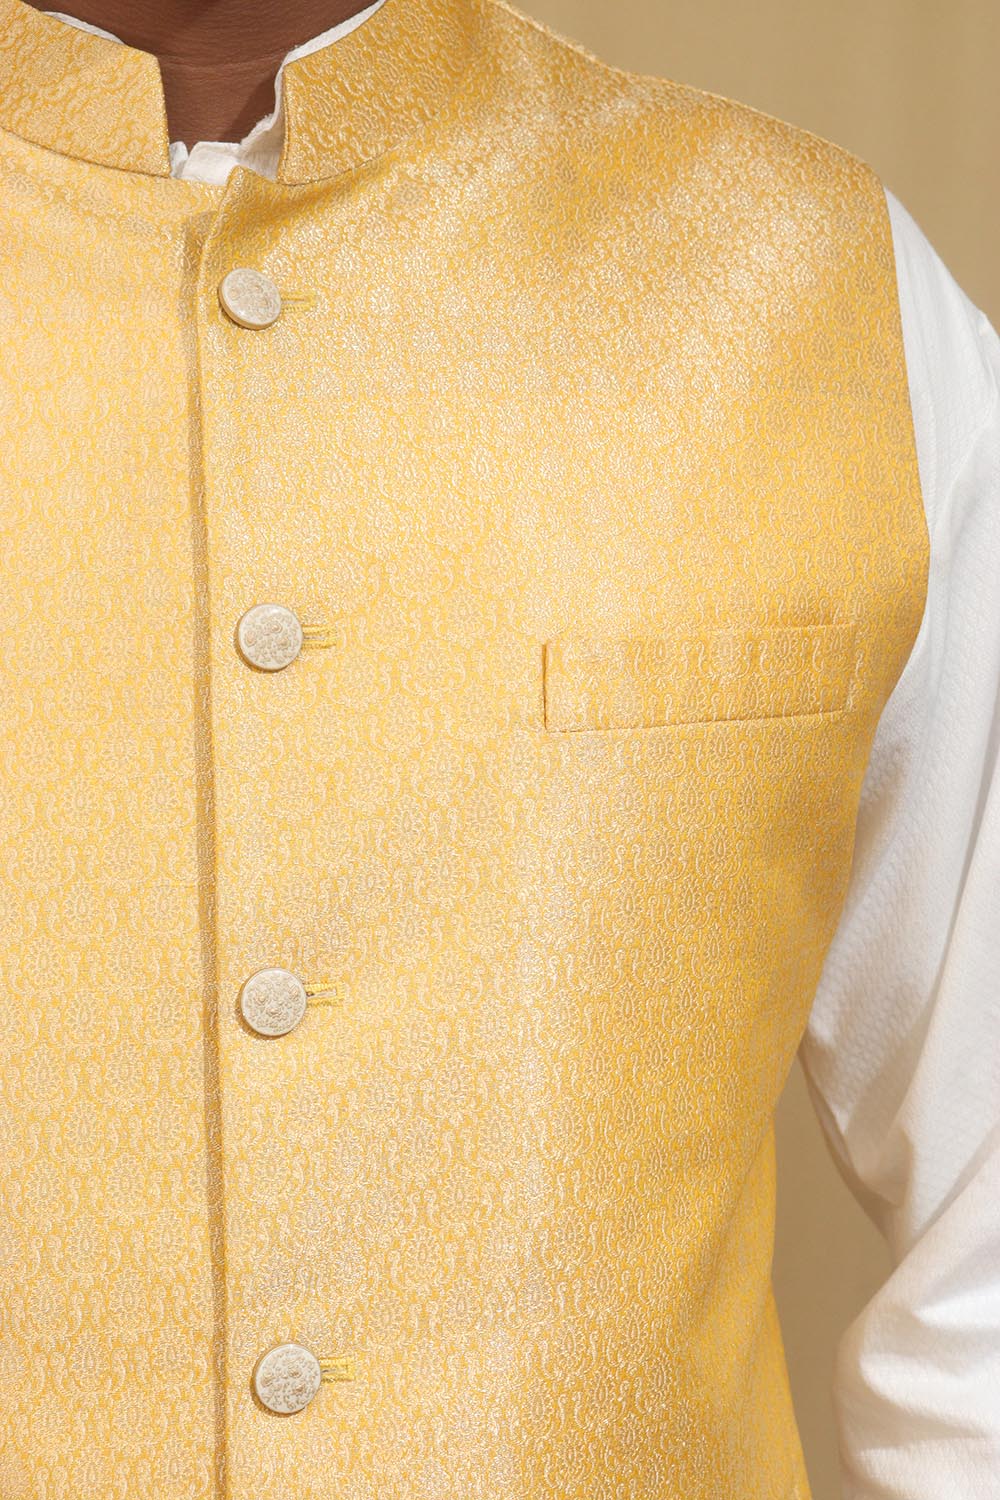 Stunning Yellow Banarasi Brocade Silk Jacket: A Must-Have Ethnic Fashion Piece - Luxurion World